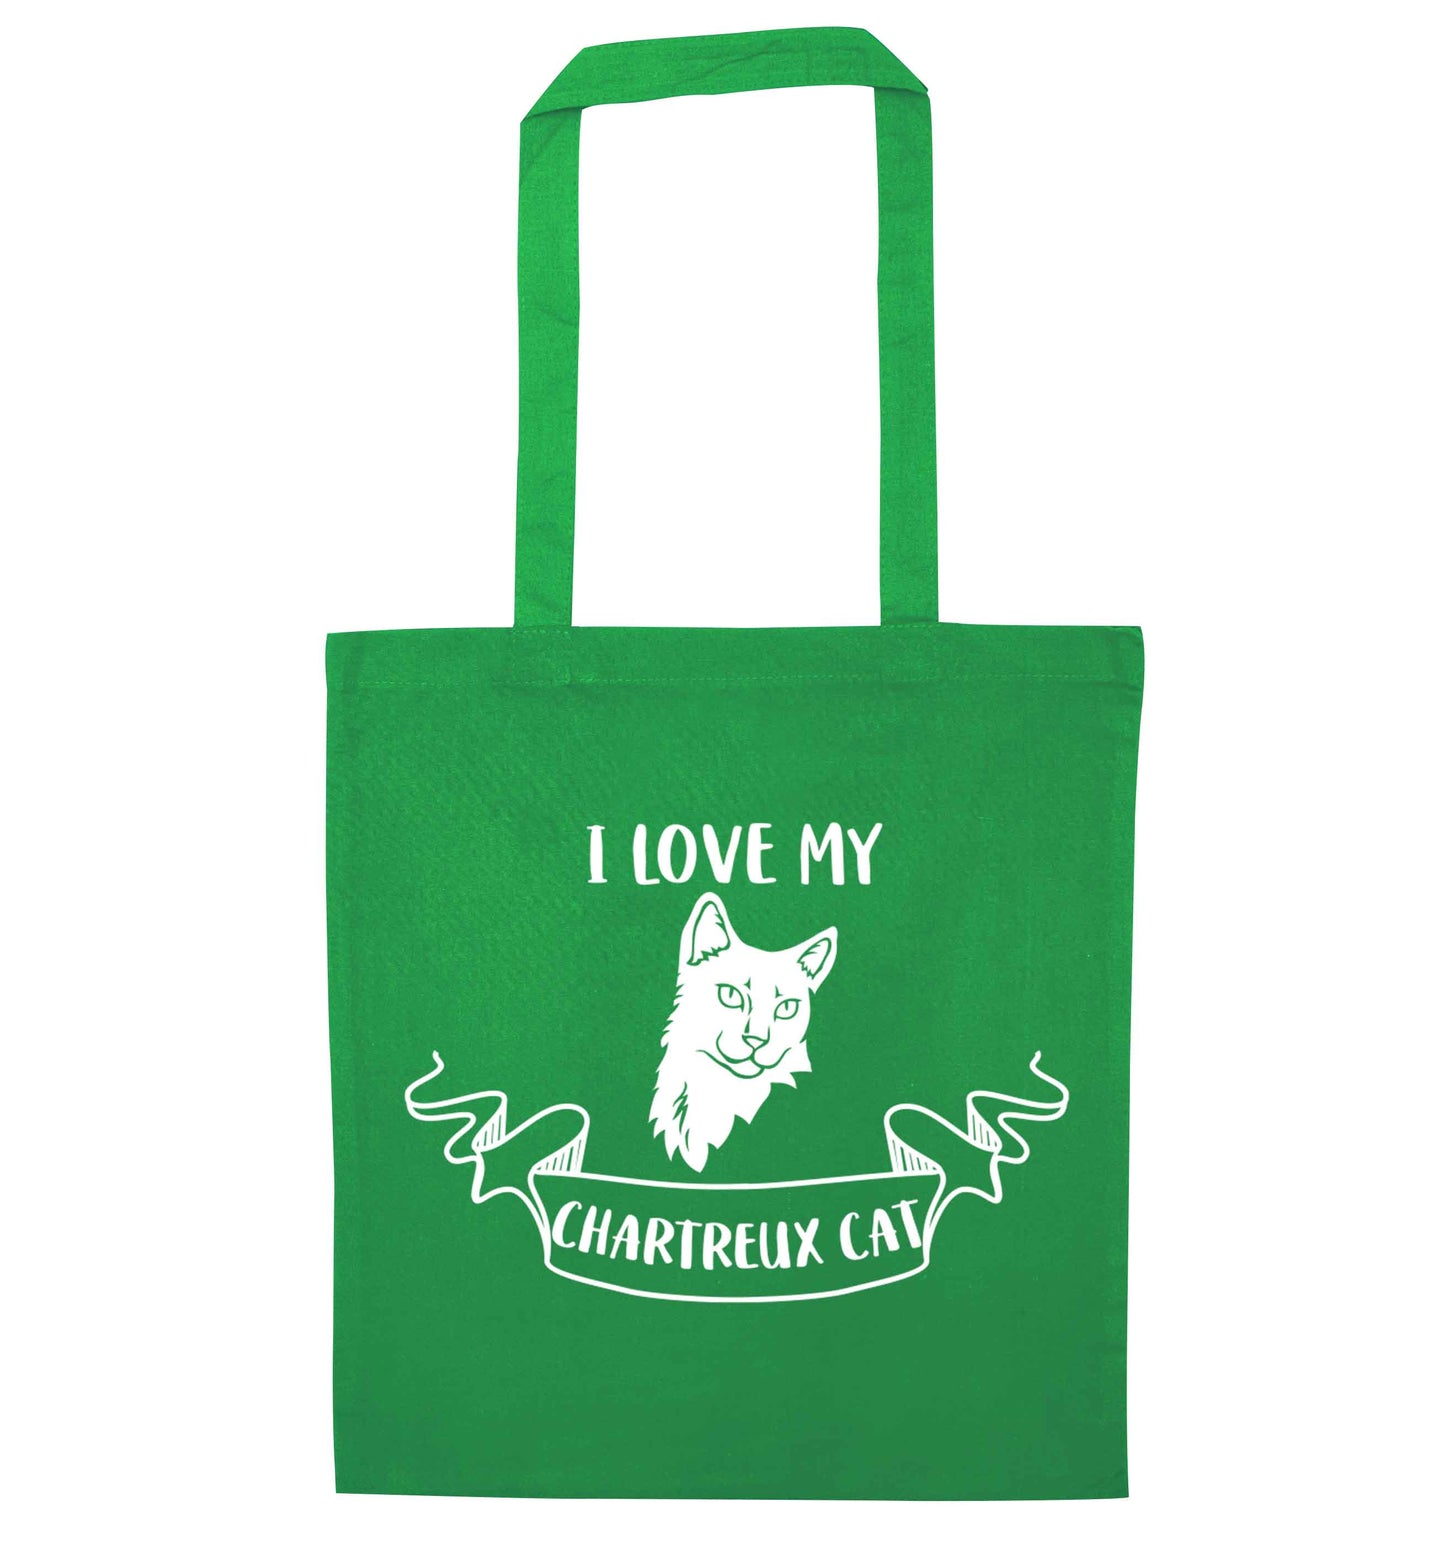 I love my chartreux cat green tote bag